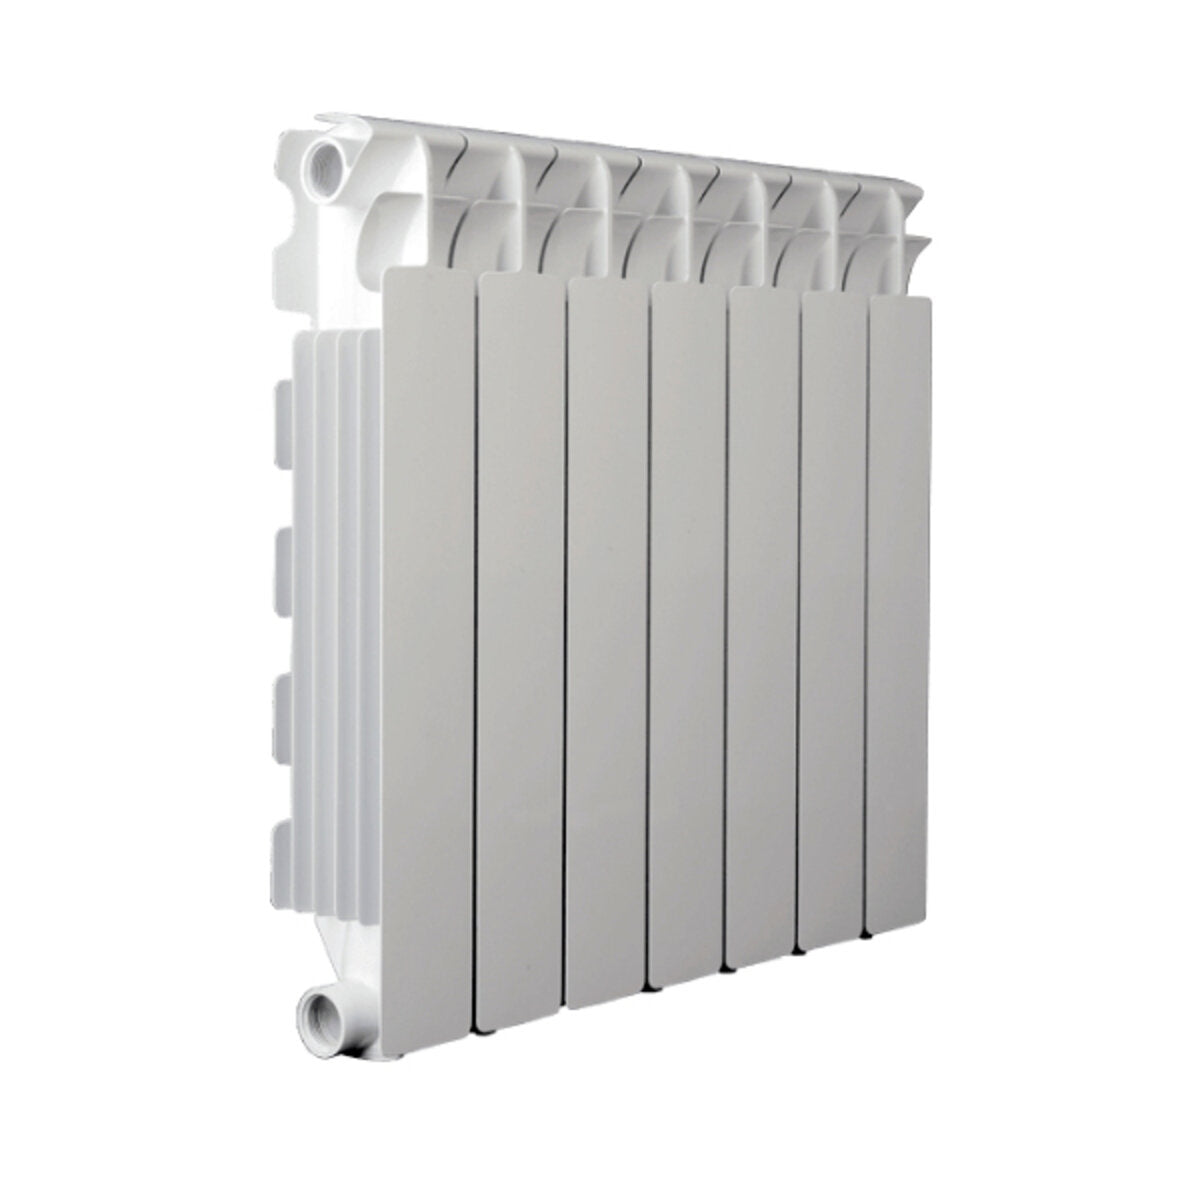 Fondital radiator in die-cast aluminum calidor super b4 7 elements center distance 350 mm